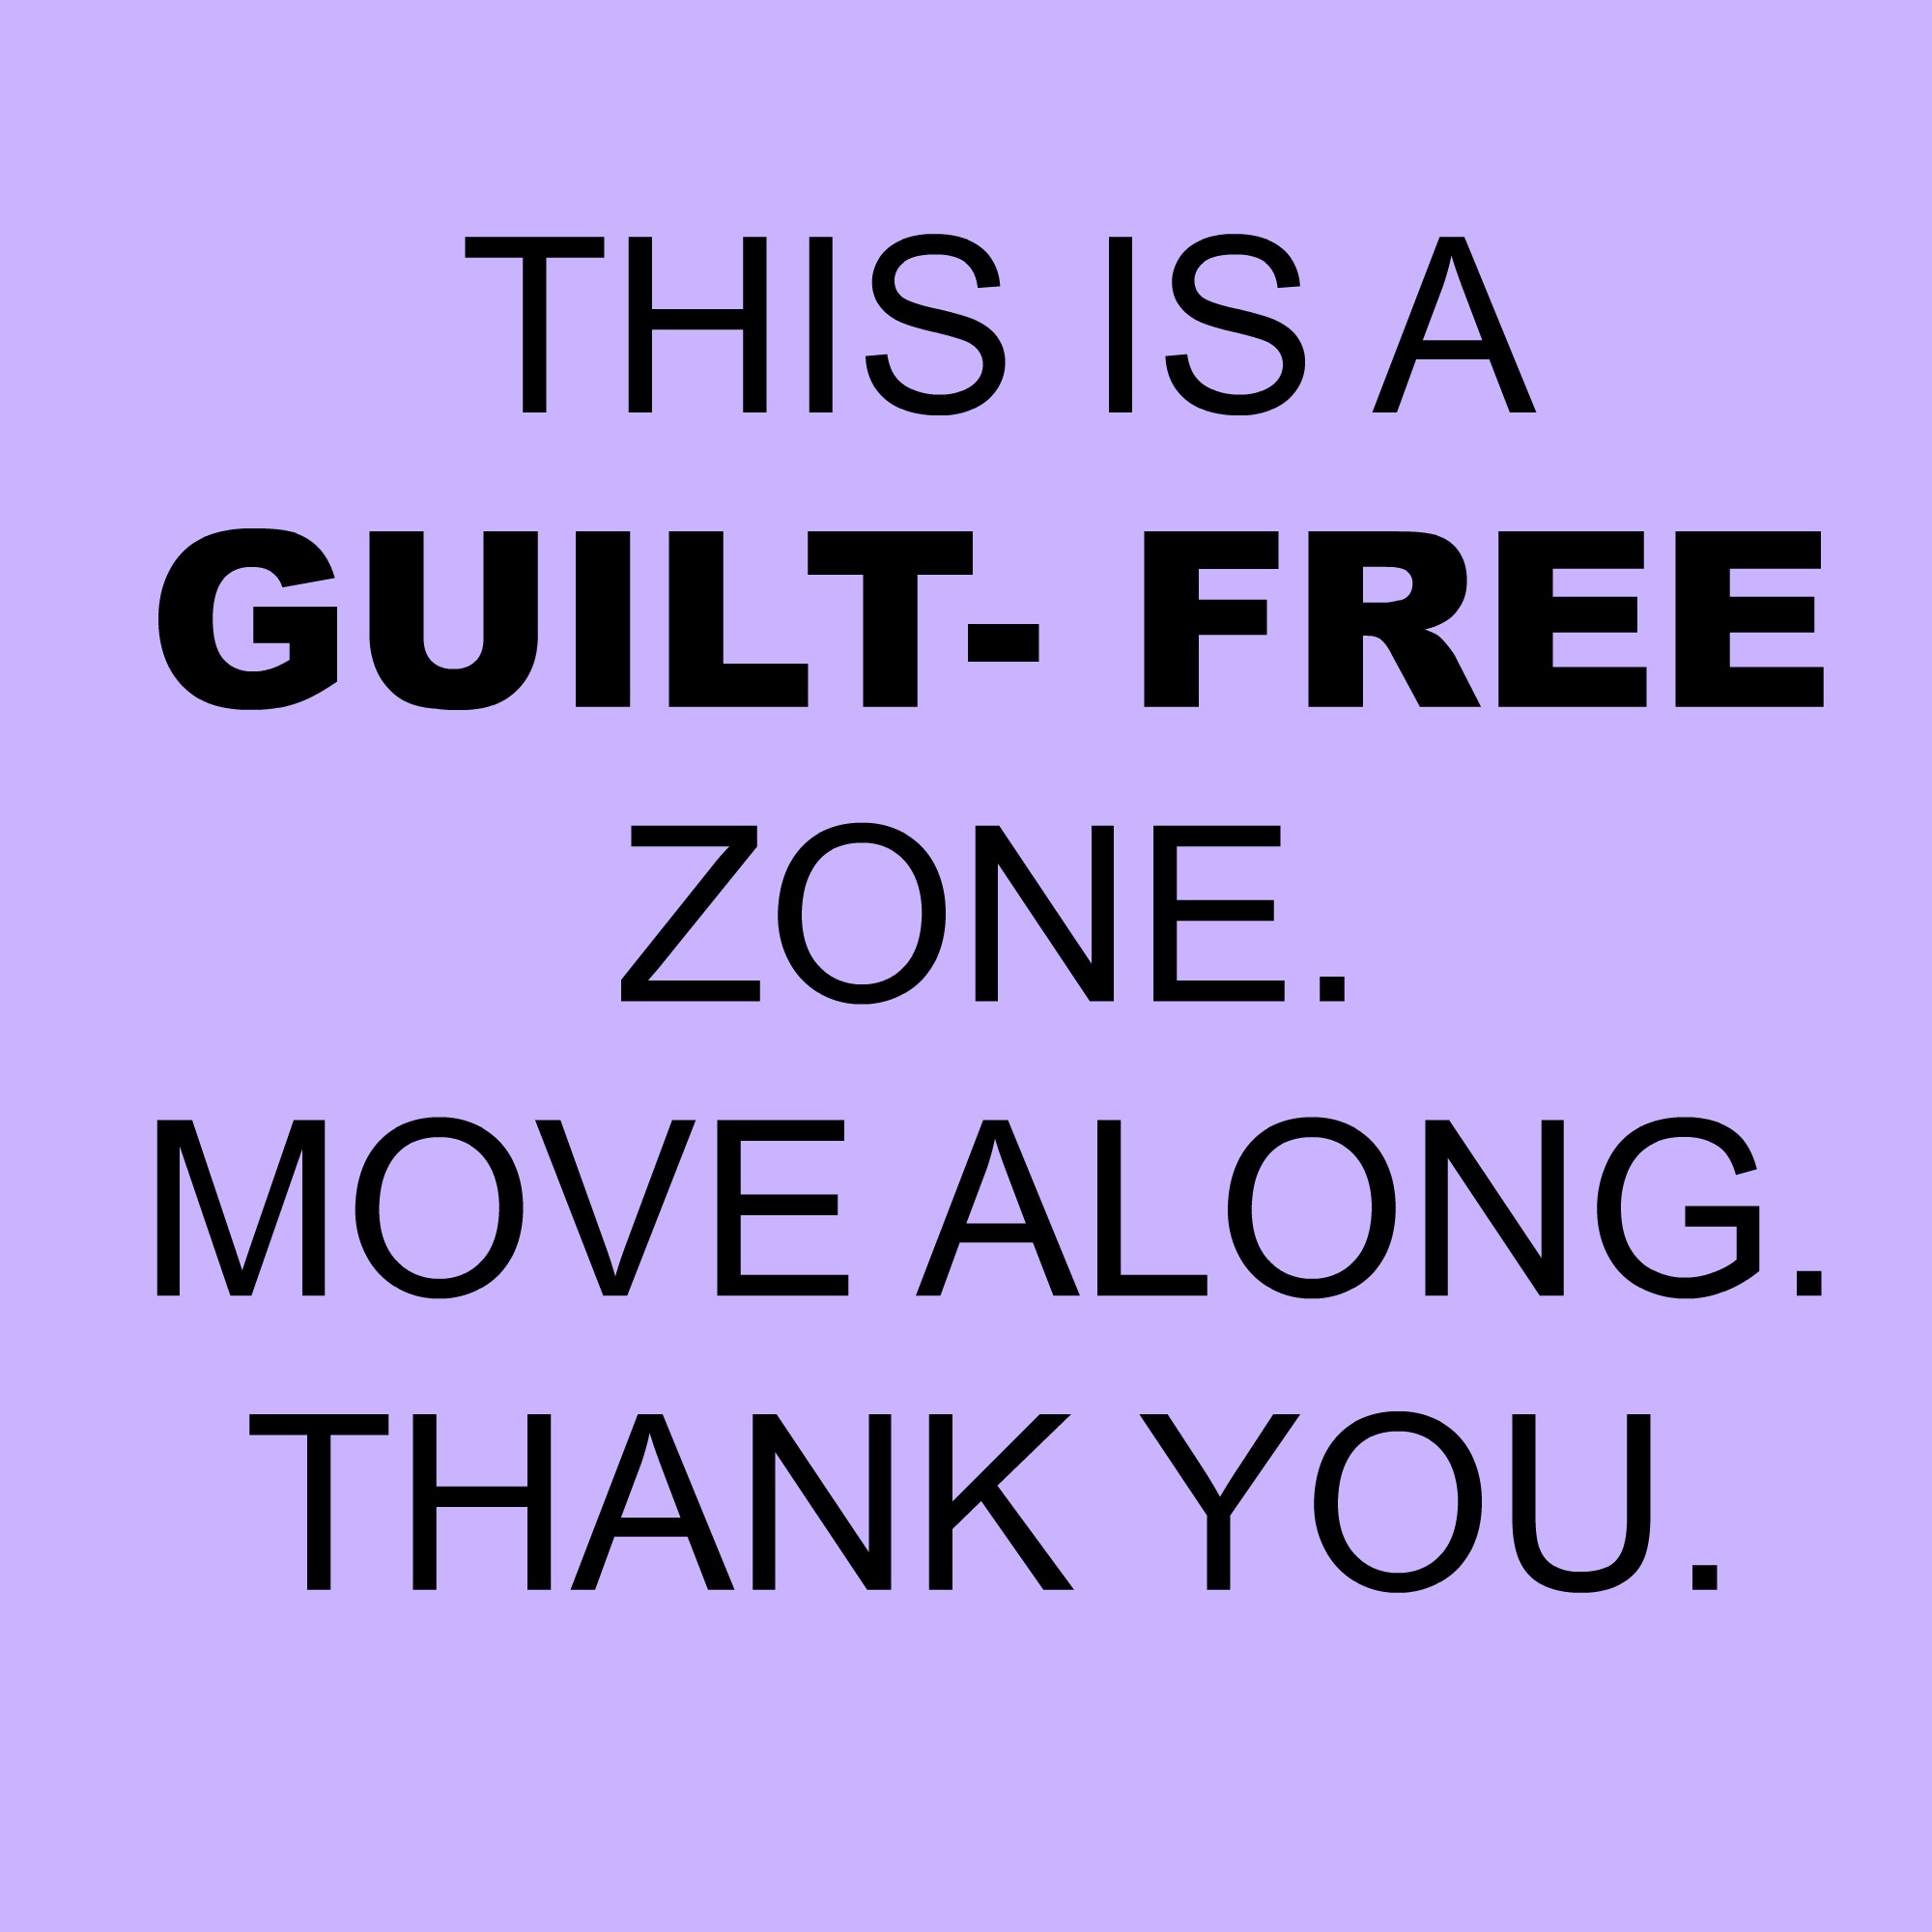 Live a Guilt-Free Life